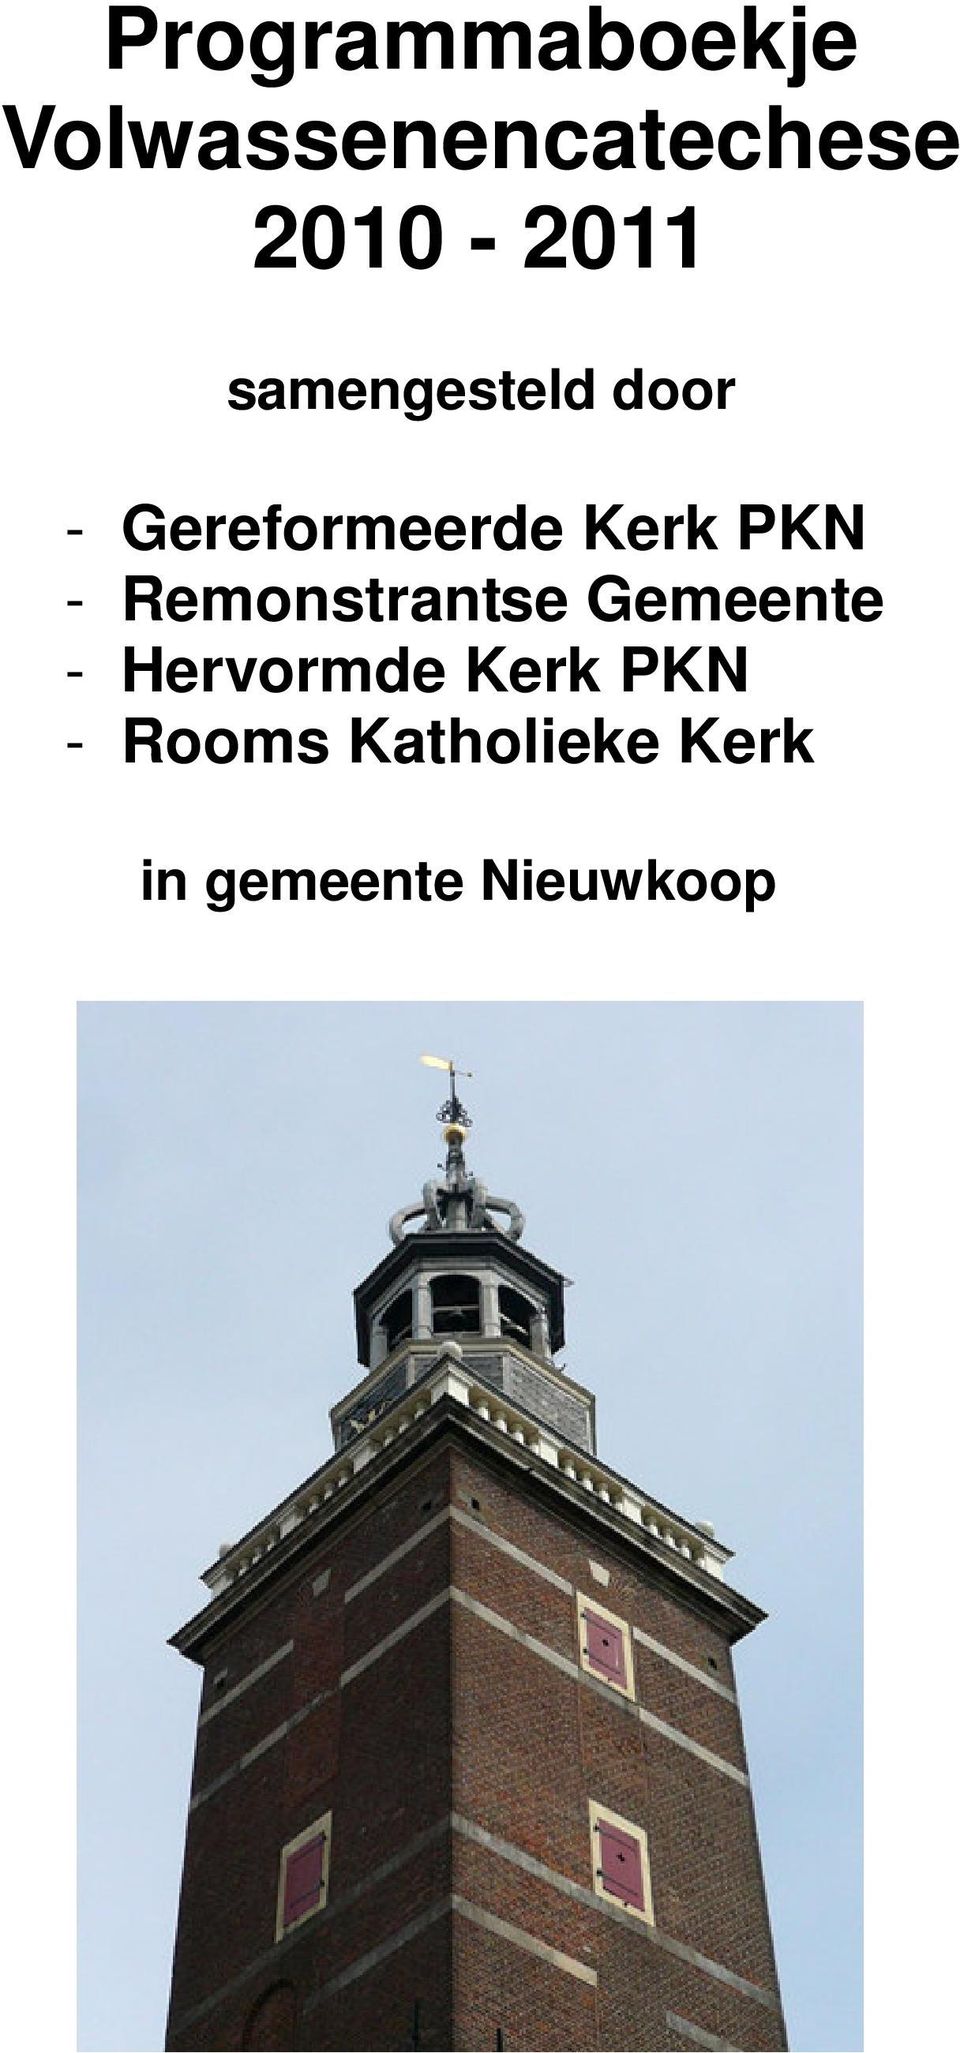 Kerk PKN - Remonstrantse Gemeente - Hervormde